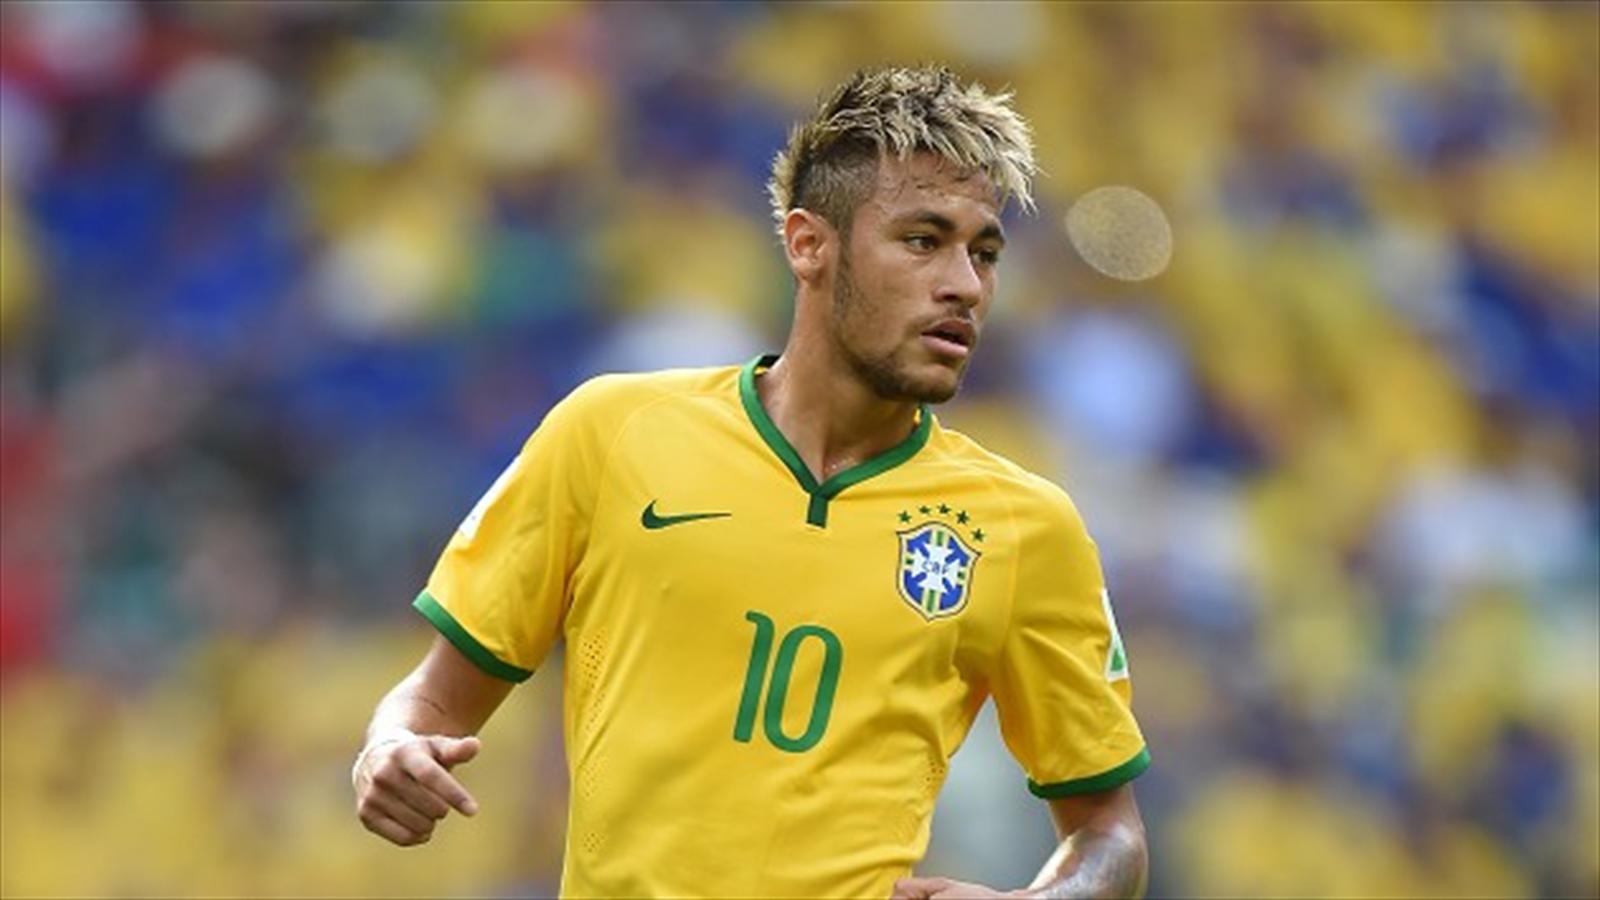 43+ Neymar HD Wallpapers 1080p on WallpaperSafari